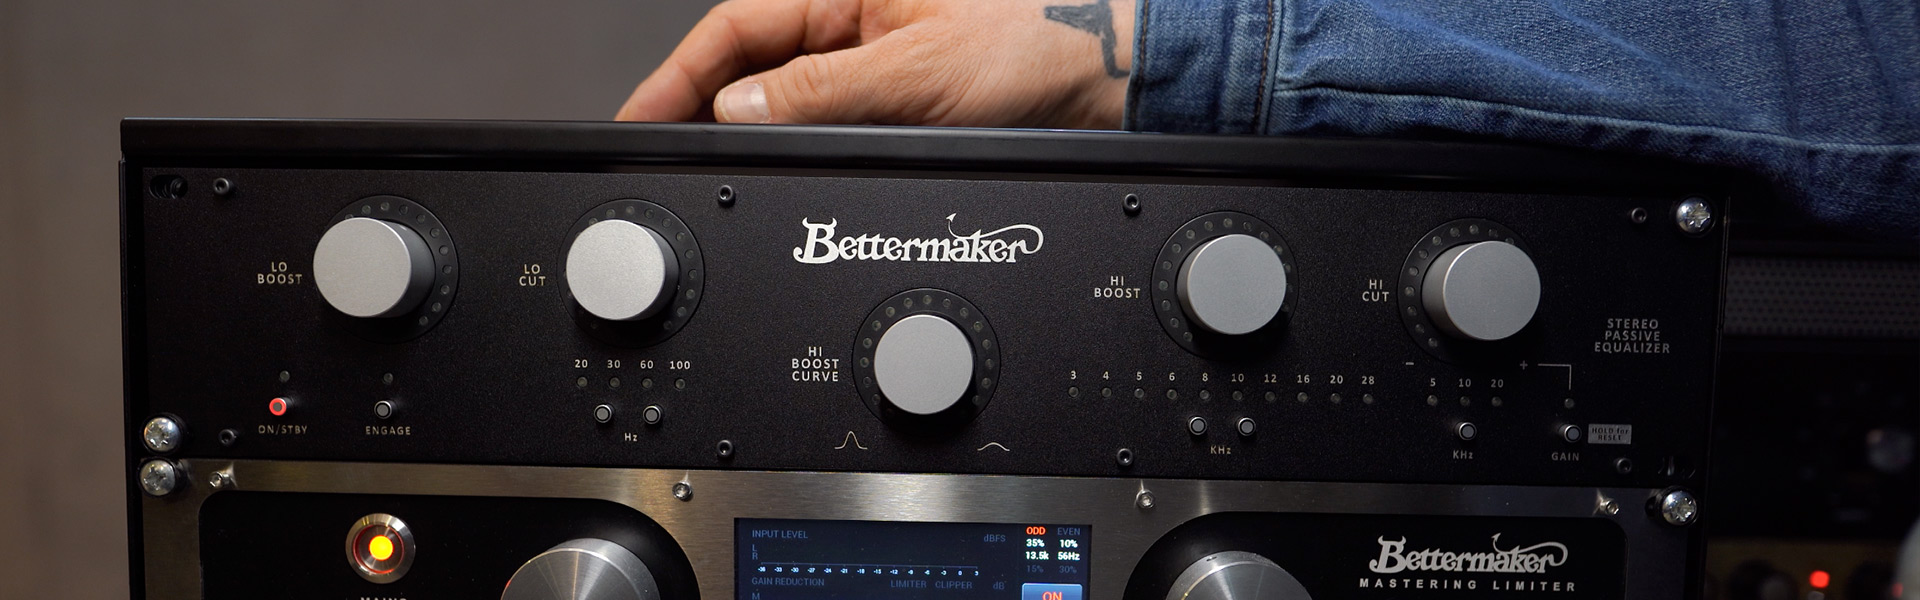 Test: Bettermaker Stereo Passive Equalizer